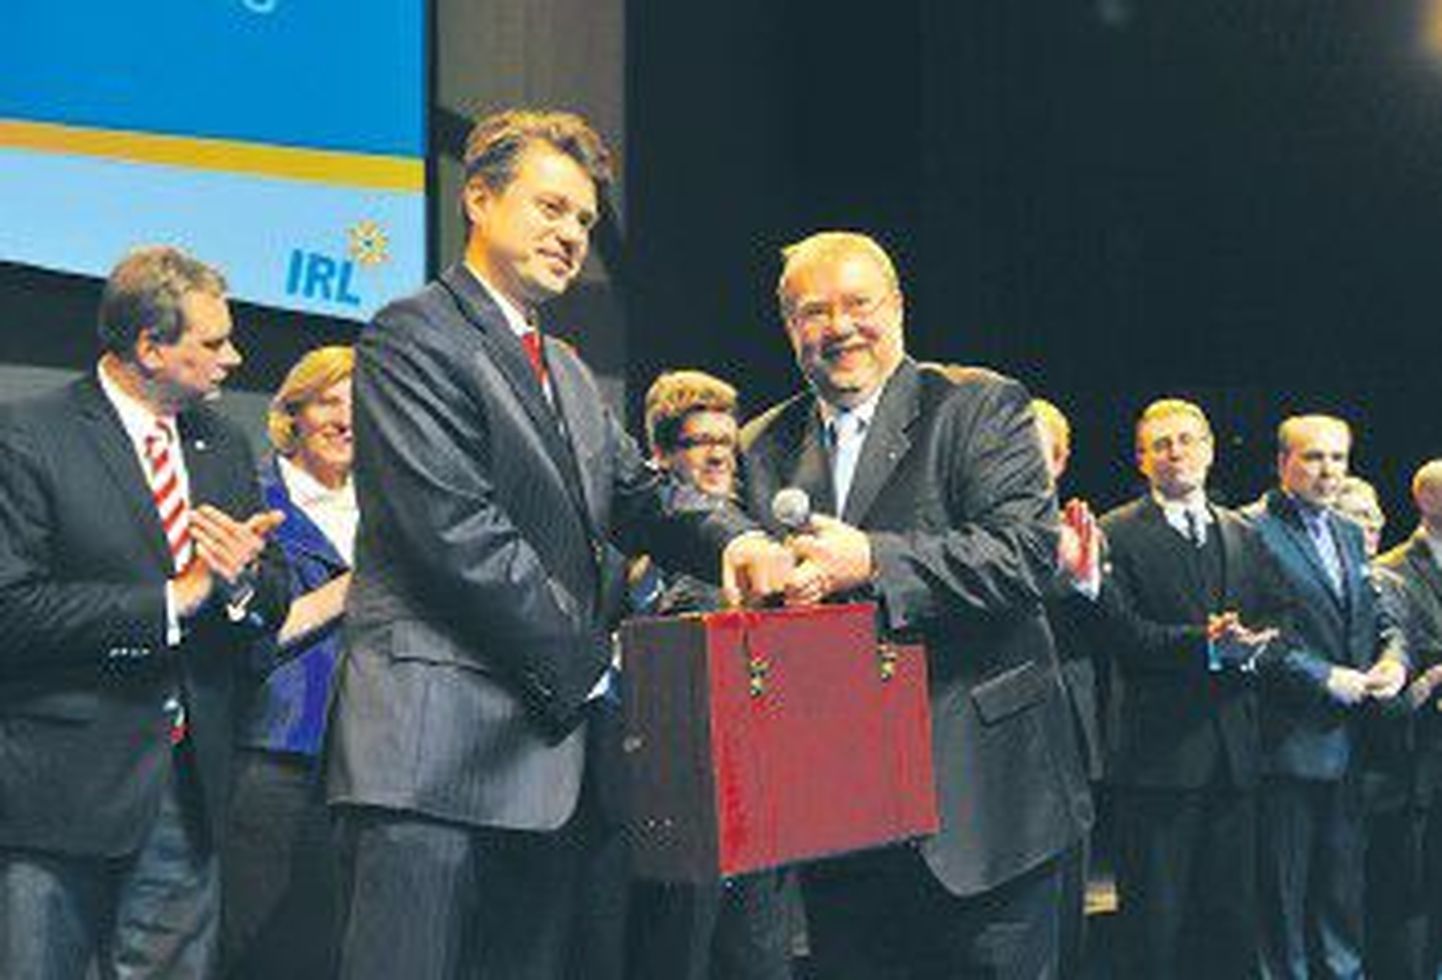 Новый председатель IRL Урмас Рейнсалу (слева) и почетный председатель партии Март Лаар.